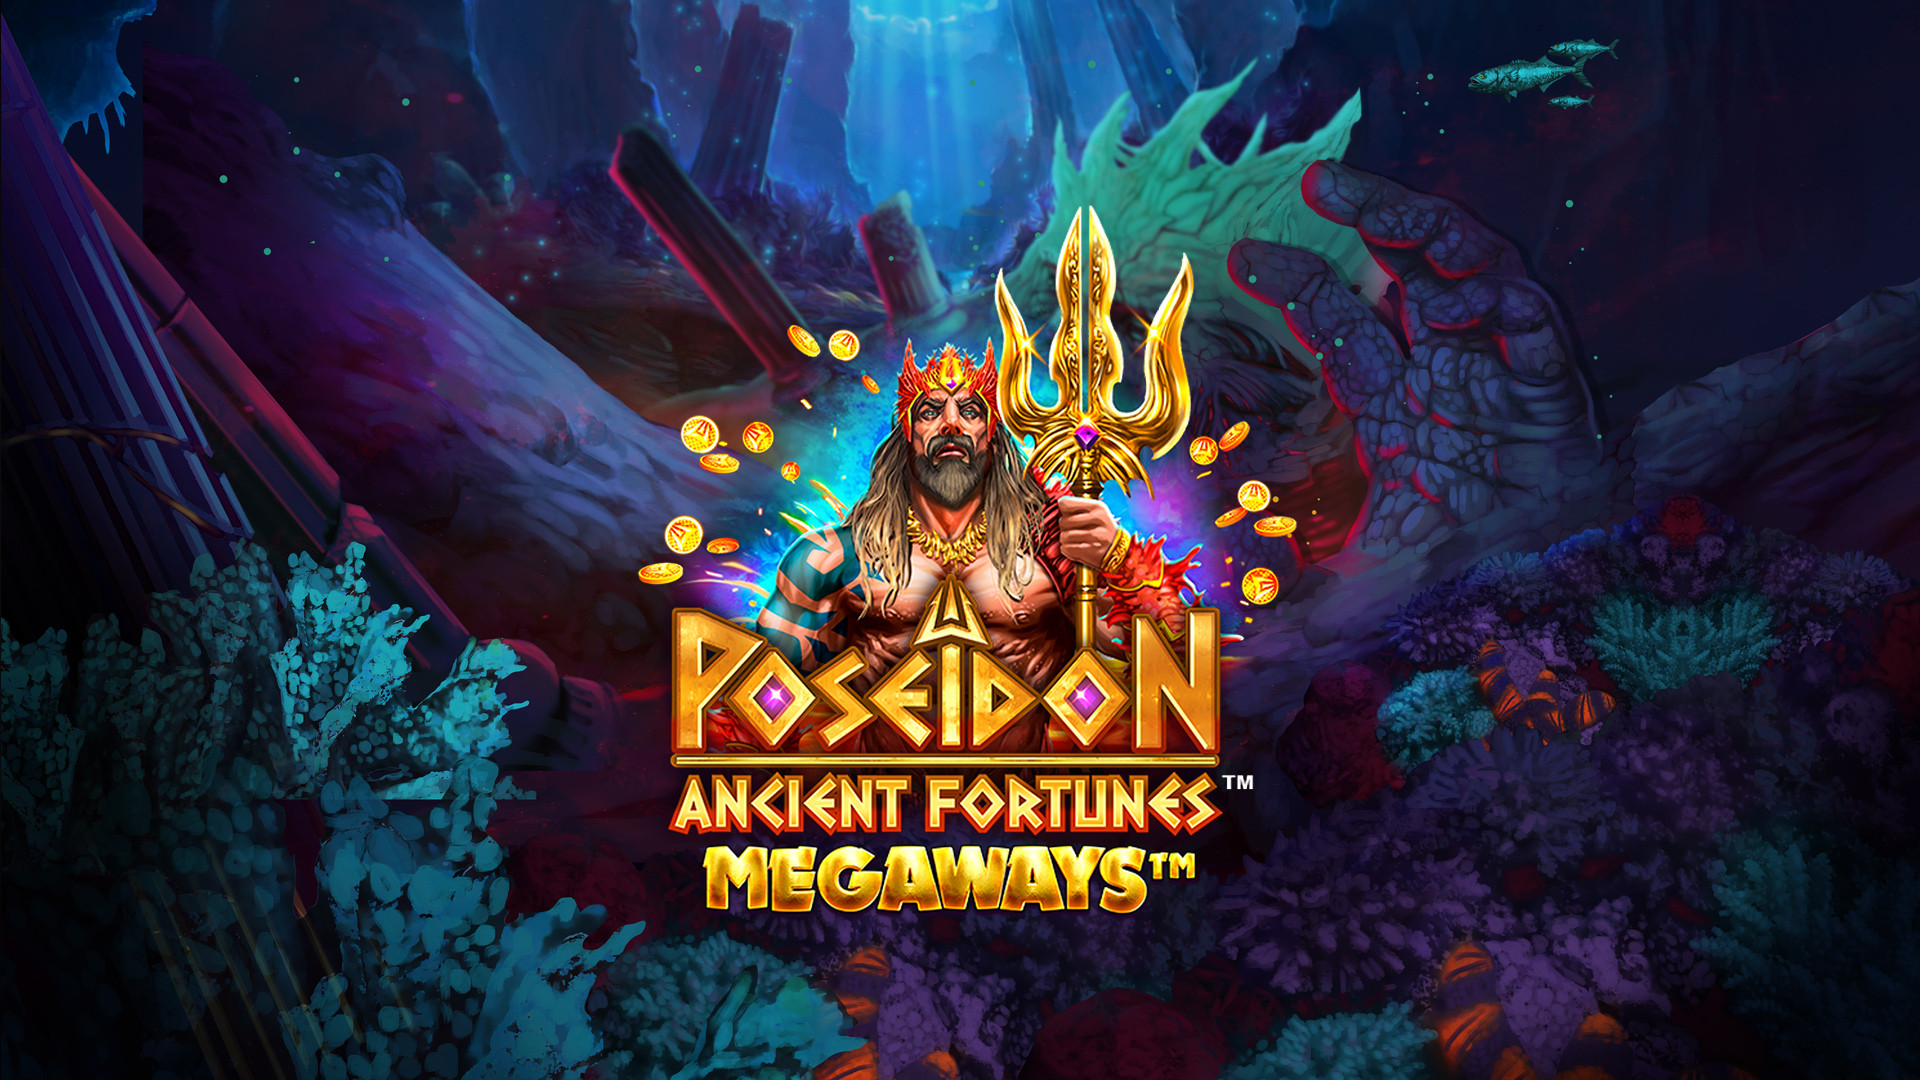 Ancient Fortunes: Poseidon MEGAWAYS